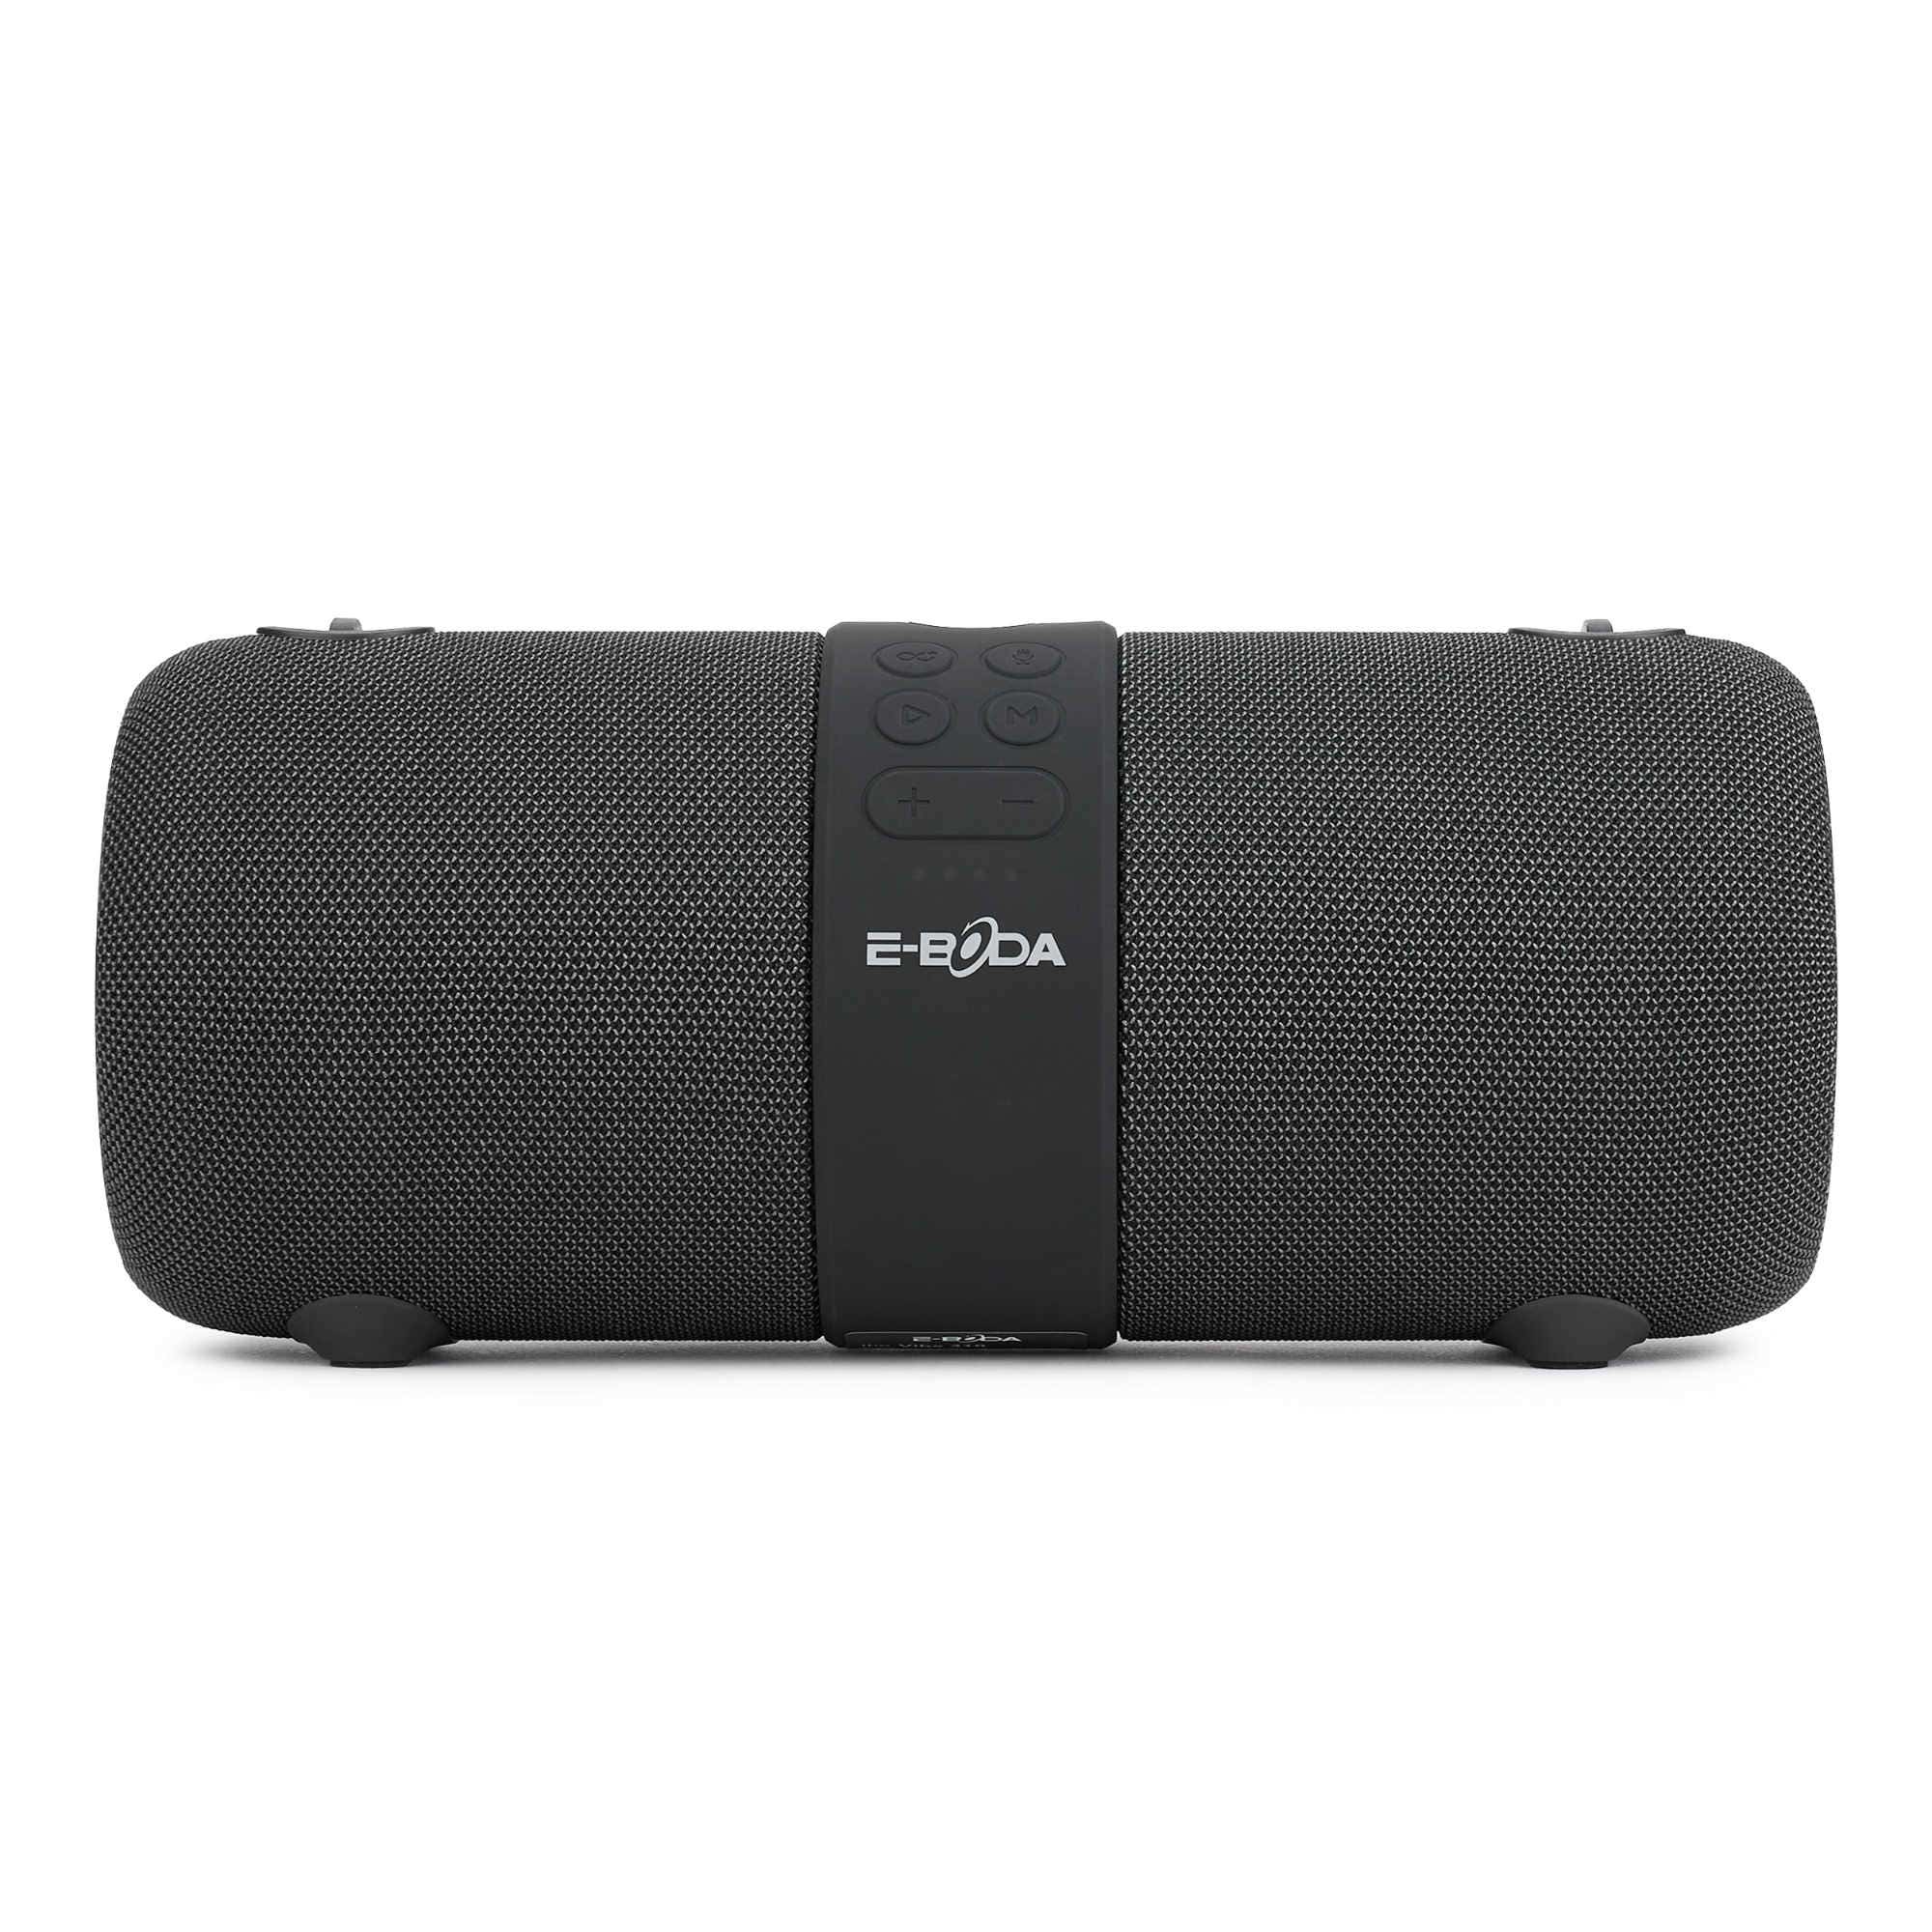 Boxa portabila E-Boda The Vibe 310, 250 W, USB, bluetooth 4.2, radio FM, negru